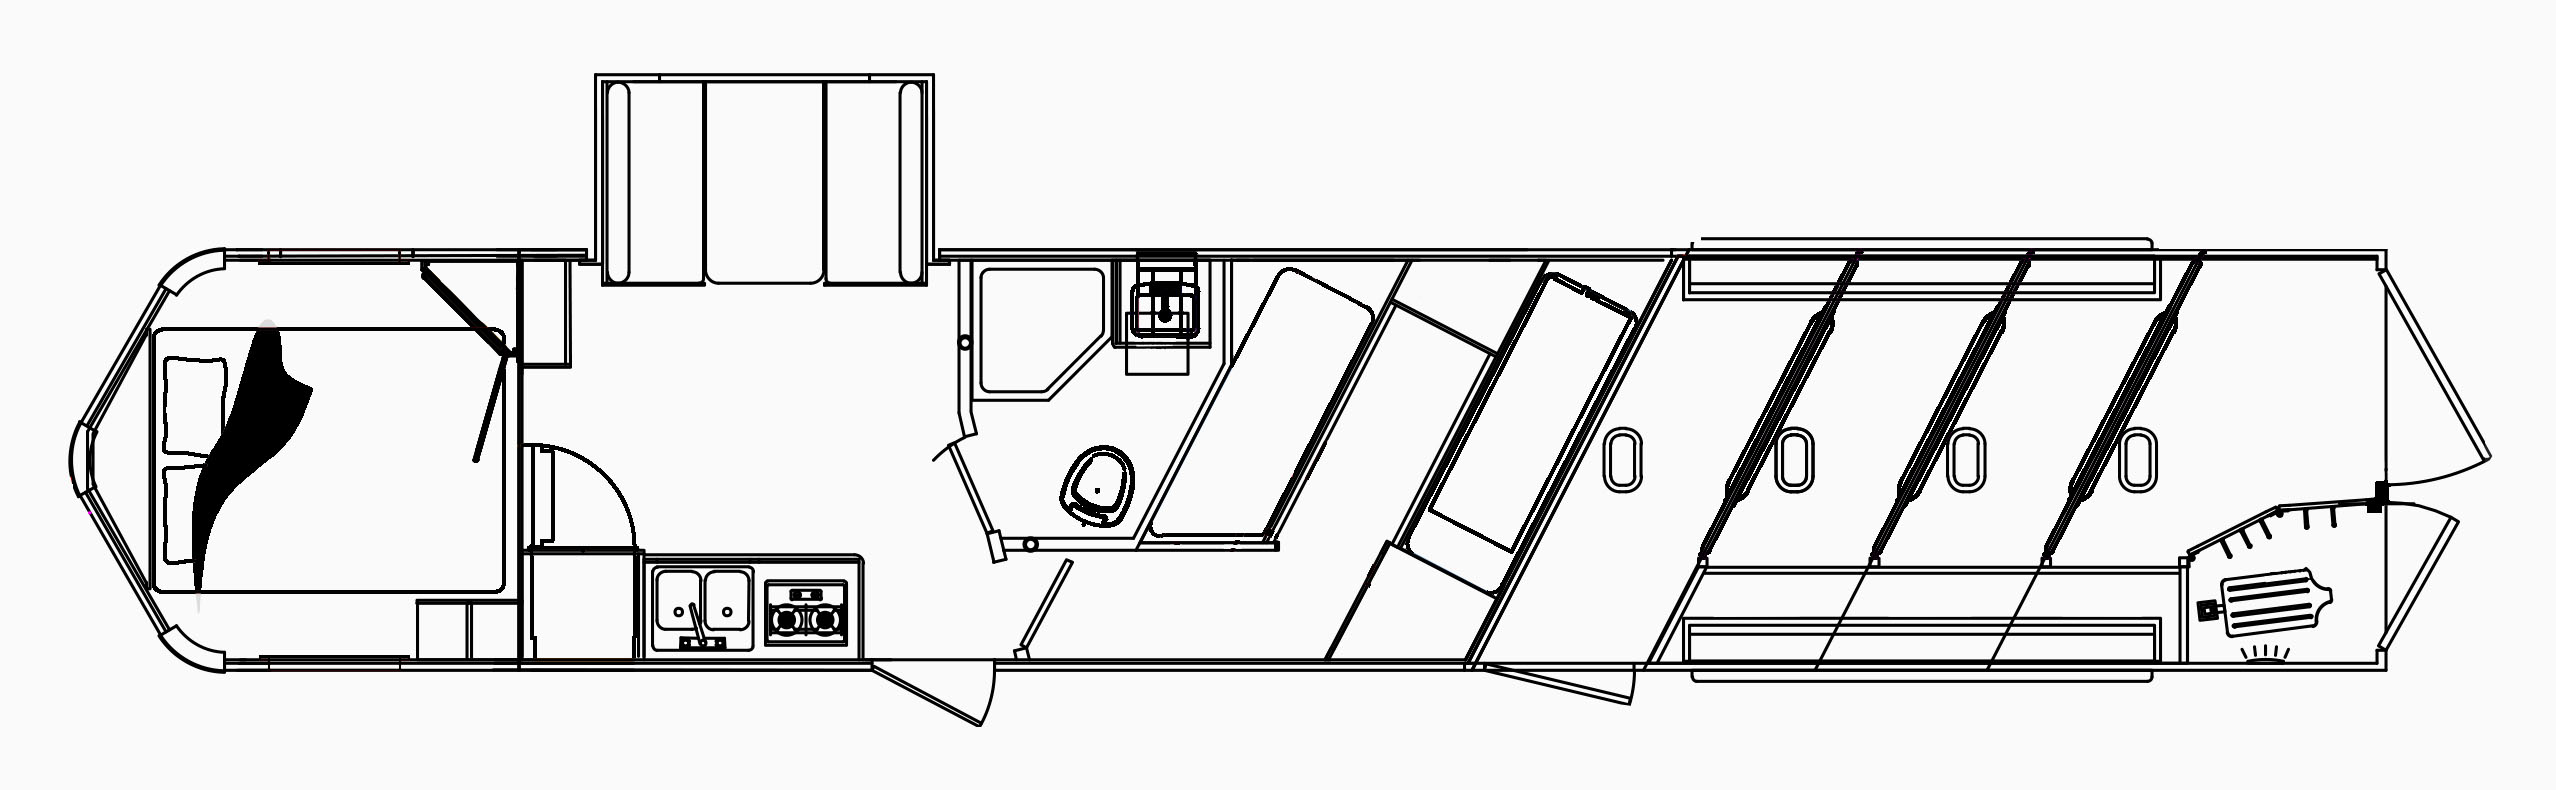 C8X15BB floorplan